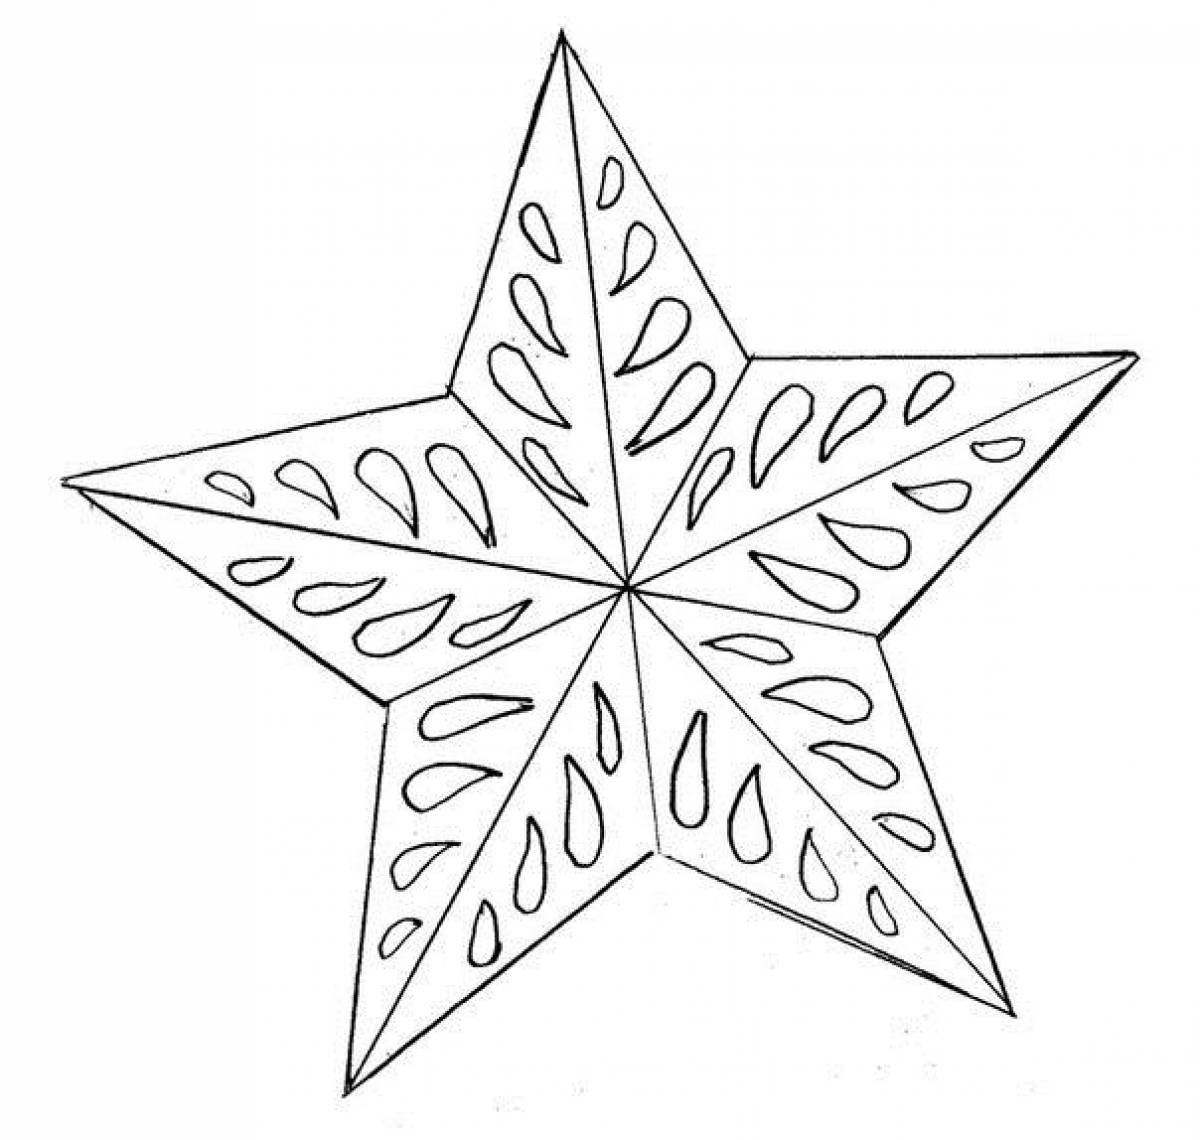 Star pattern